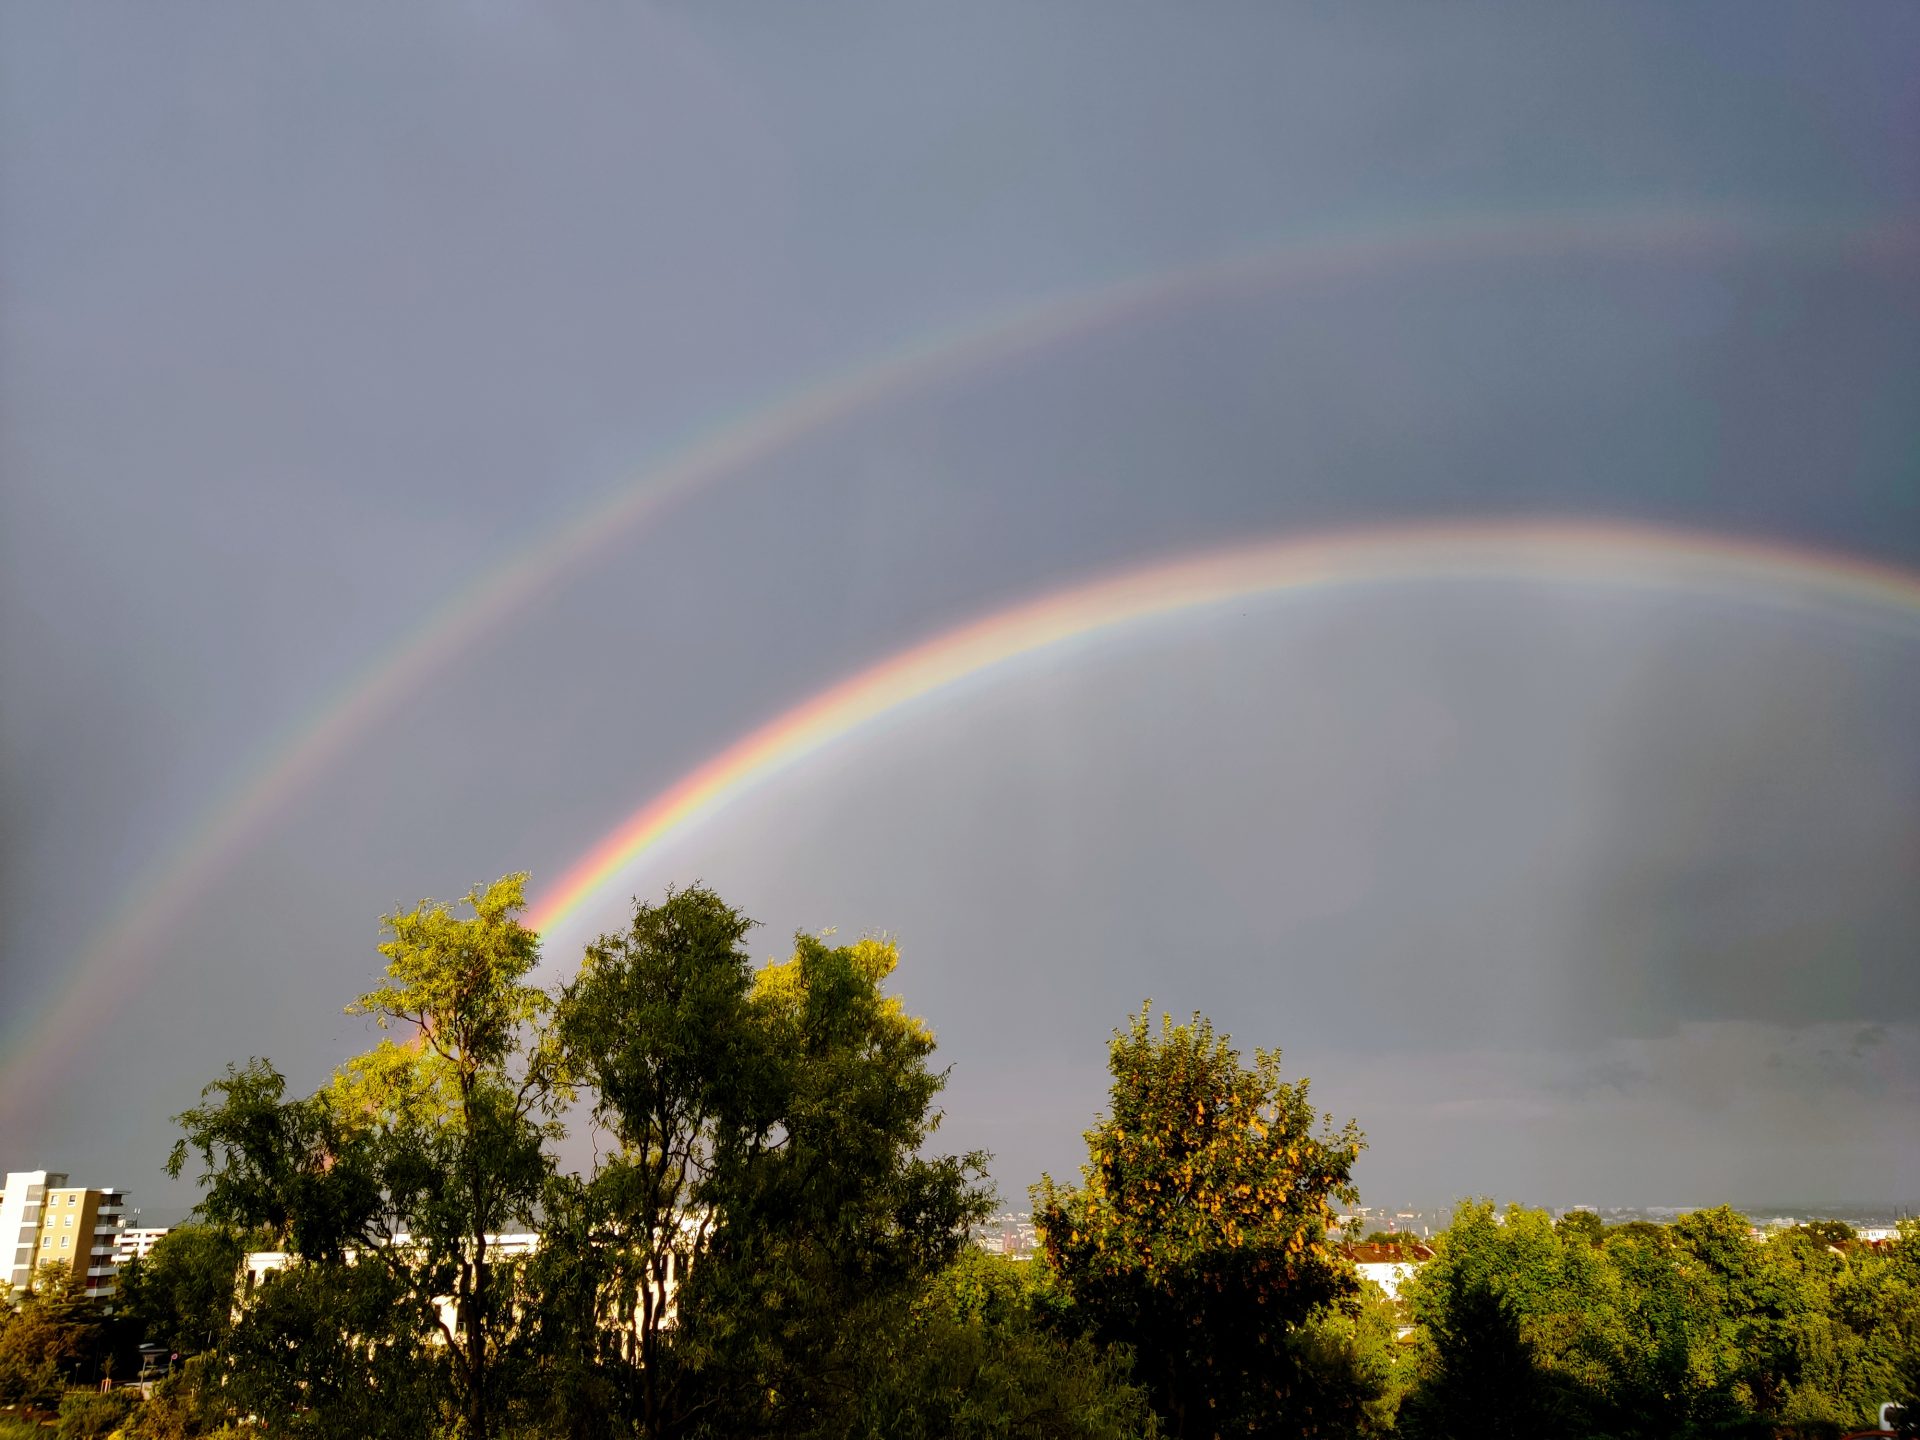 Stacked rainbows - Gestapelte Regenbögen